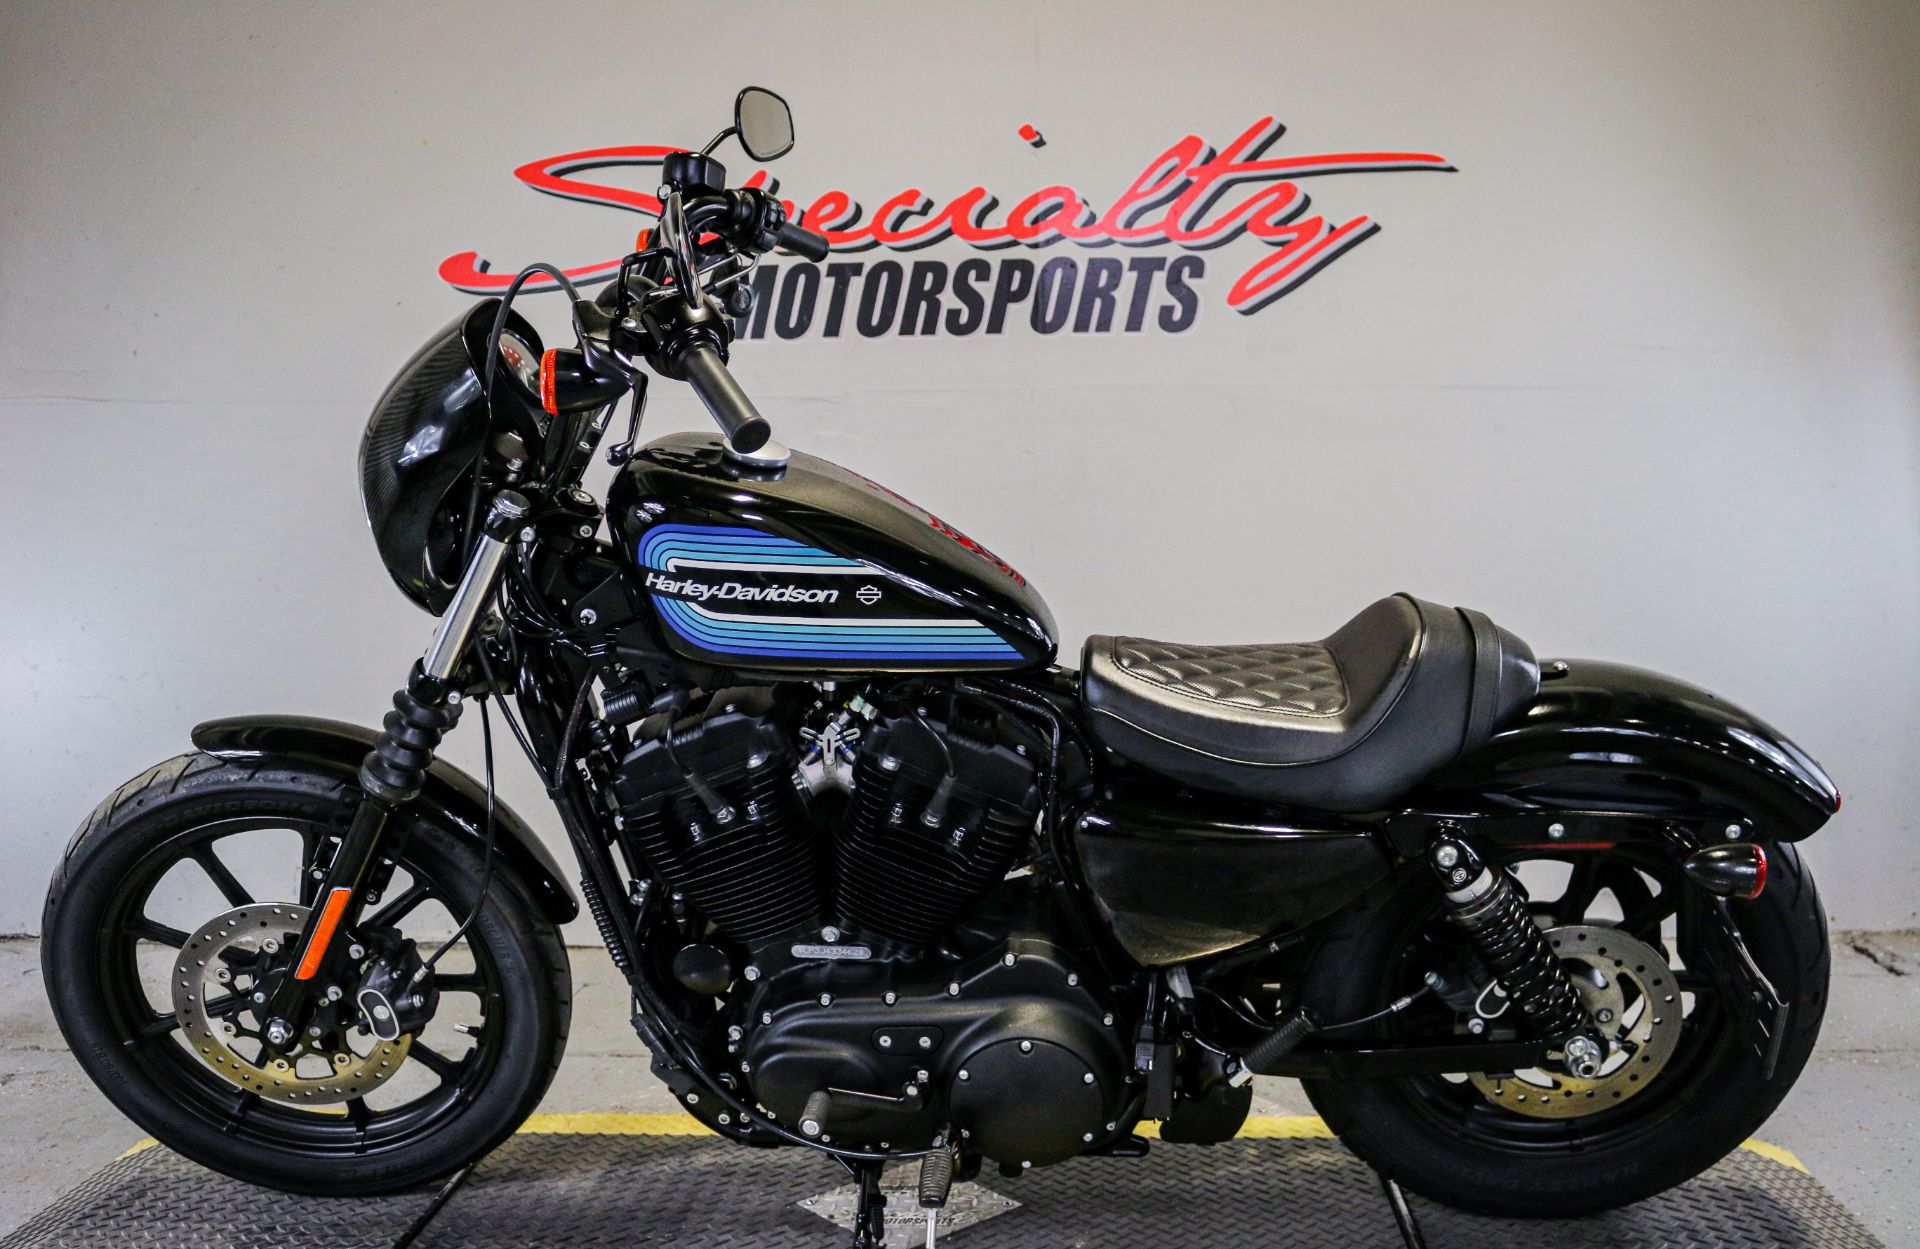 2018 Harley-Davidson Iron 1200™ in Sacramento, California - Photo 4